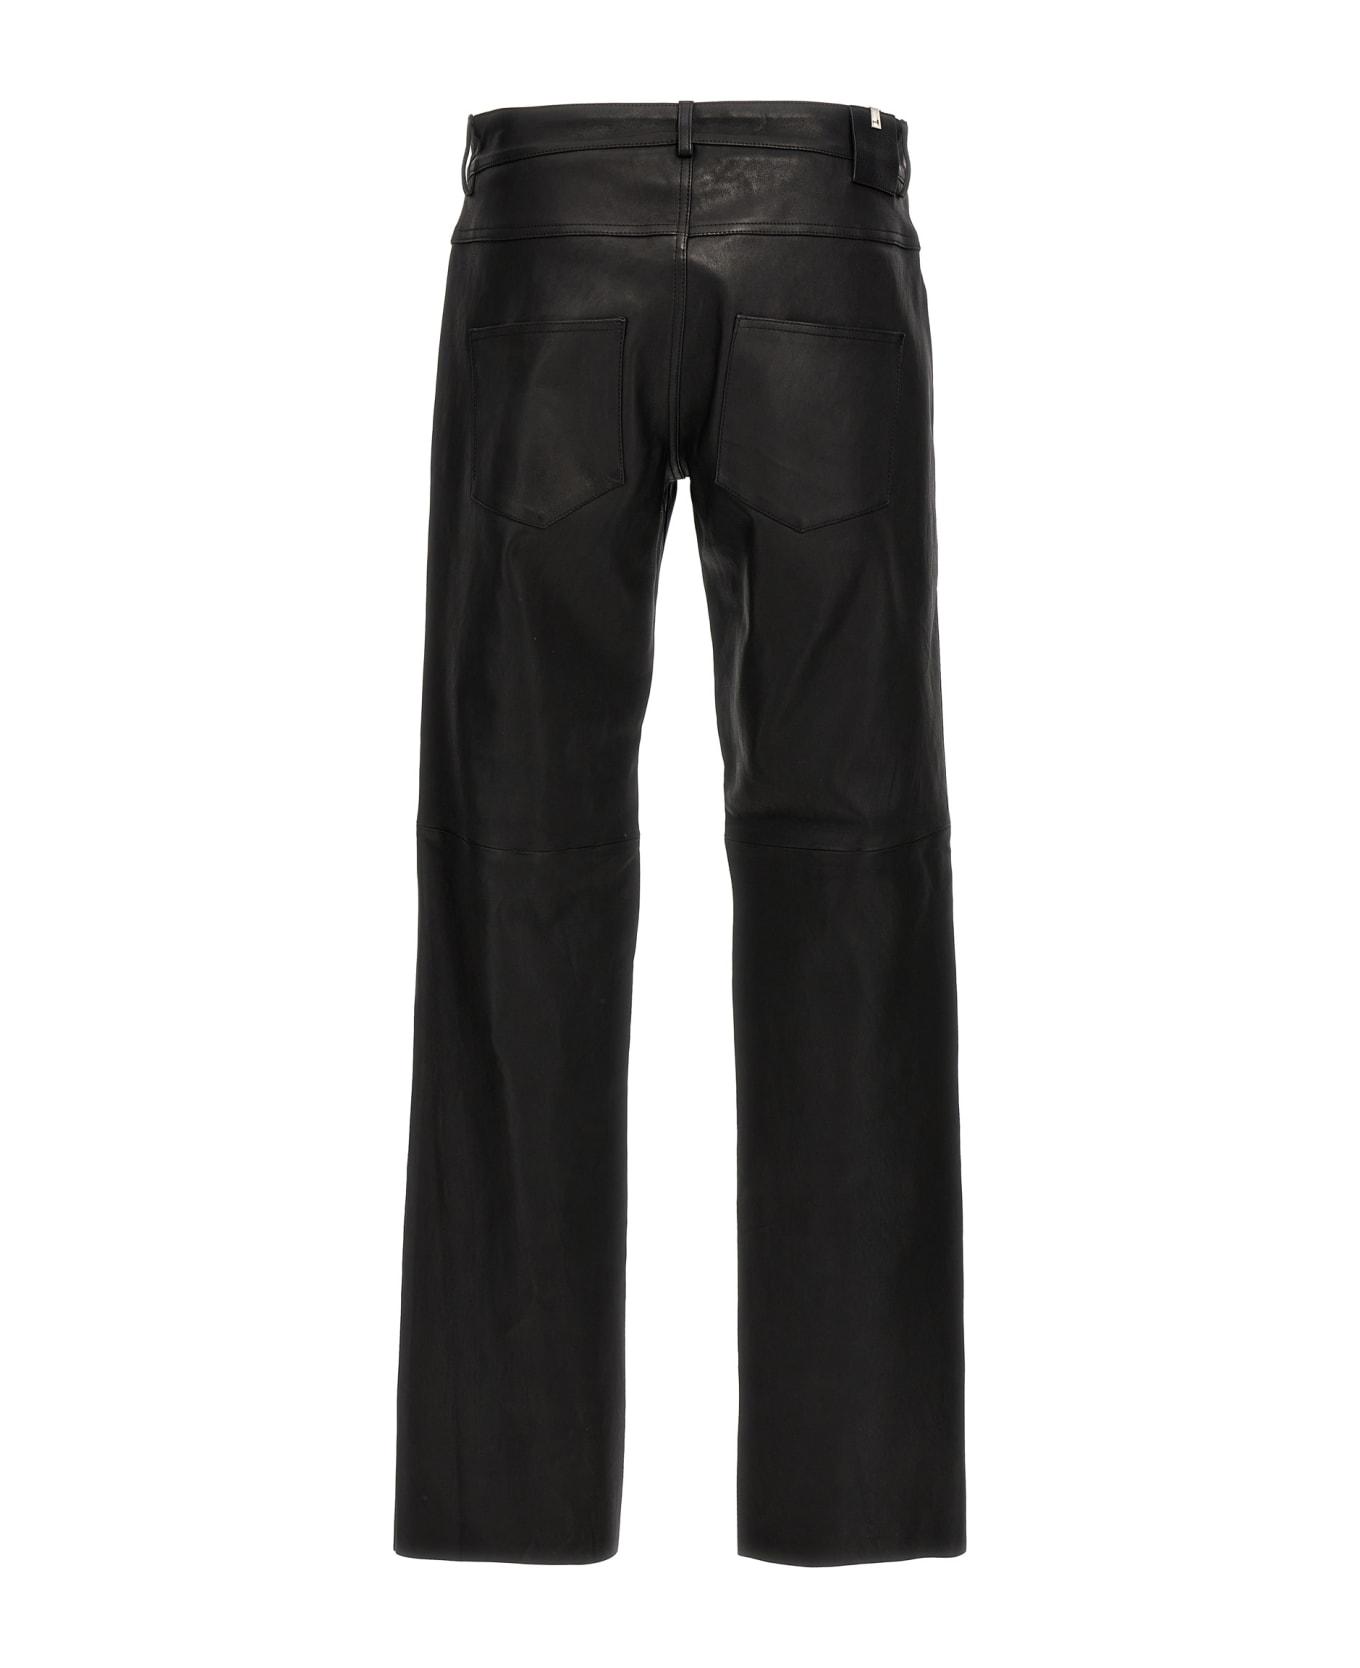 1017 ALYX 9SM Leather Pants - Black